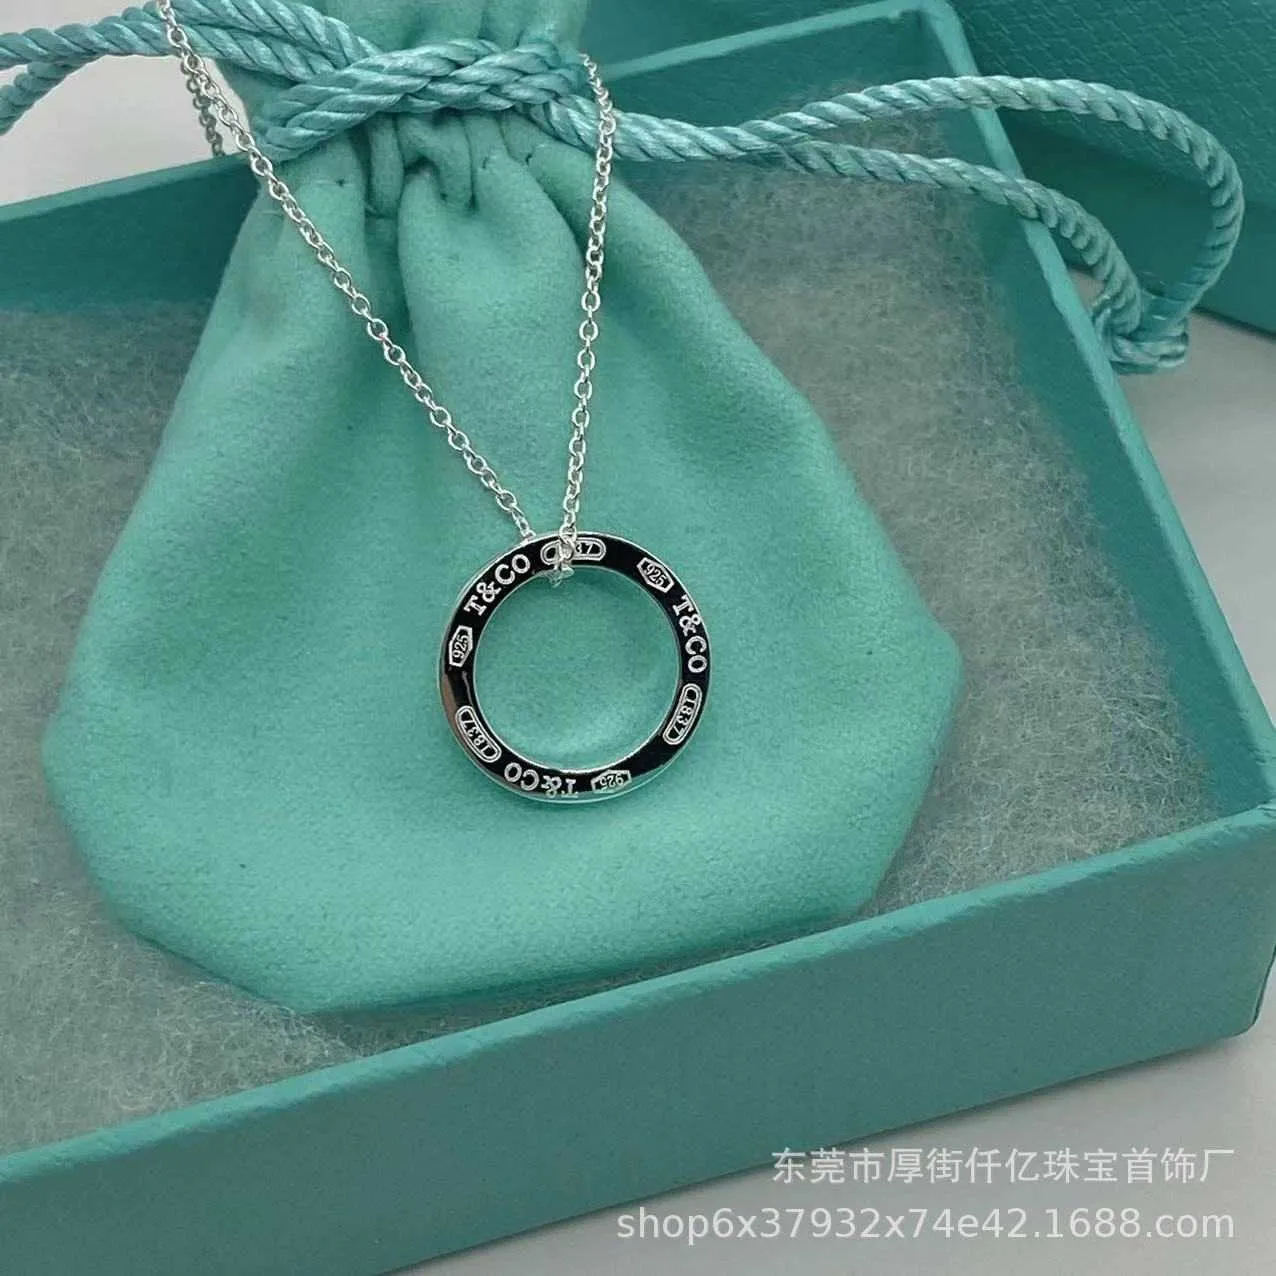 Designer Brand 1837 higher version circular pendant necklace Tiffays s925 sterling silver fashionable minimalist collarbone chain